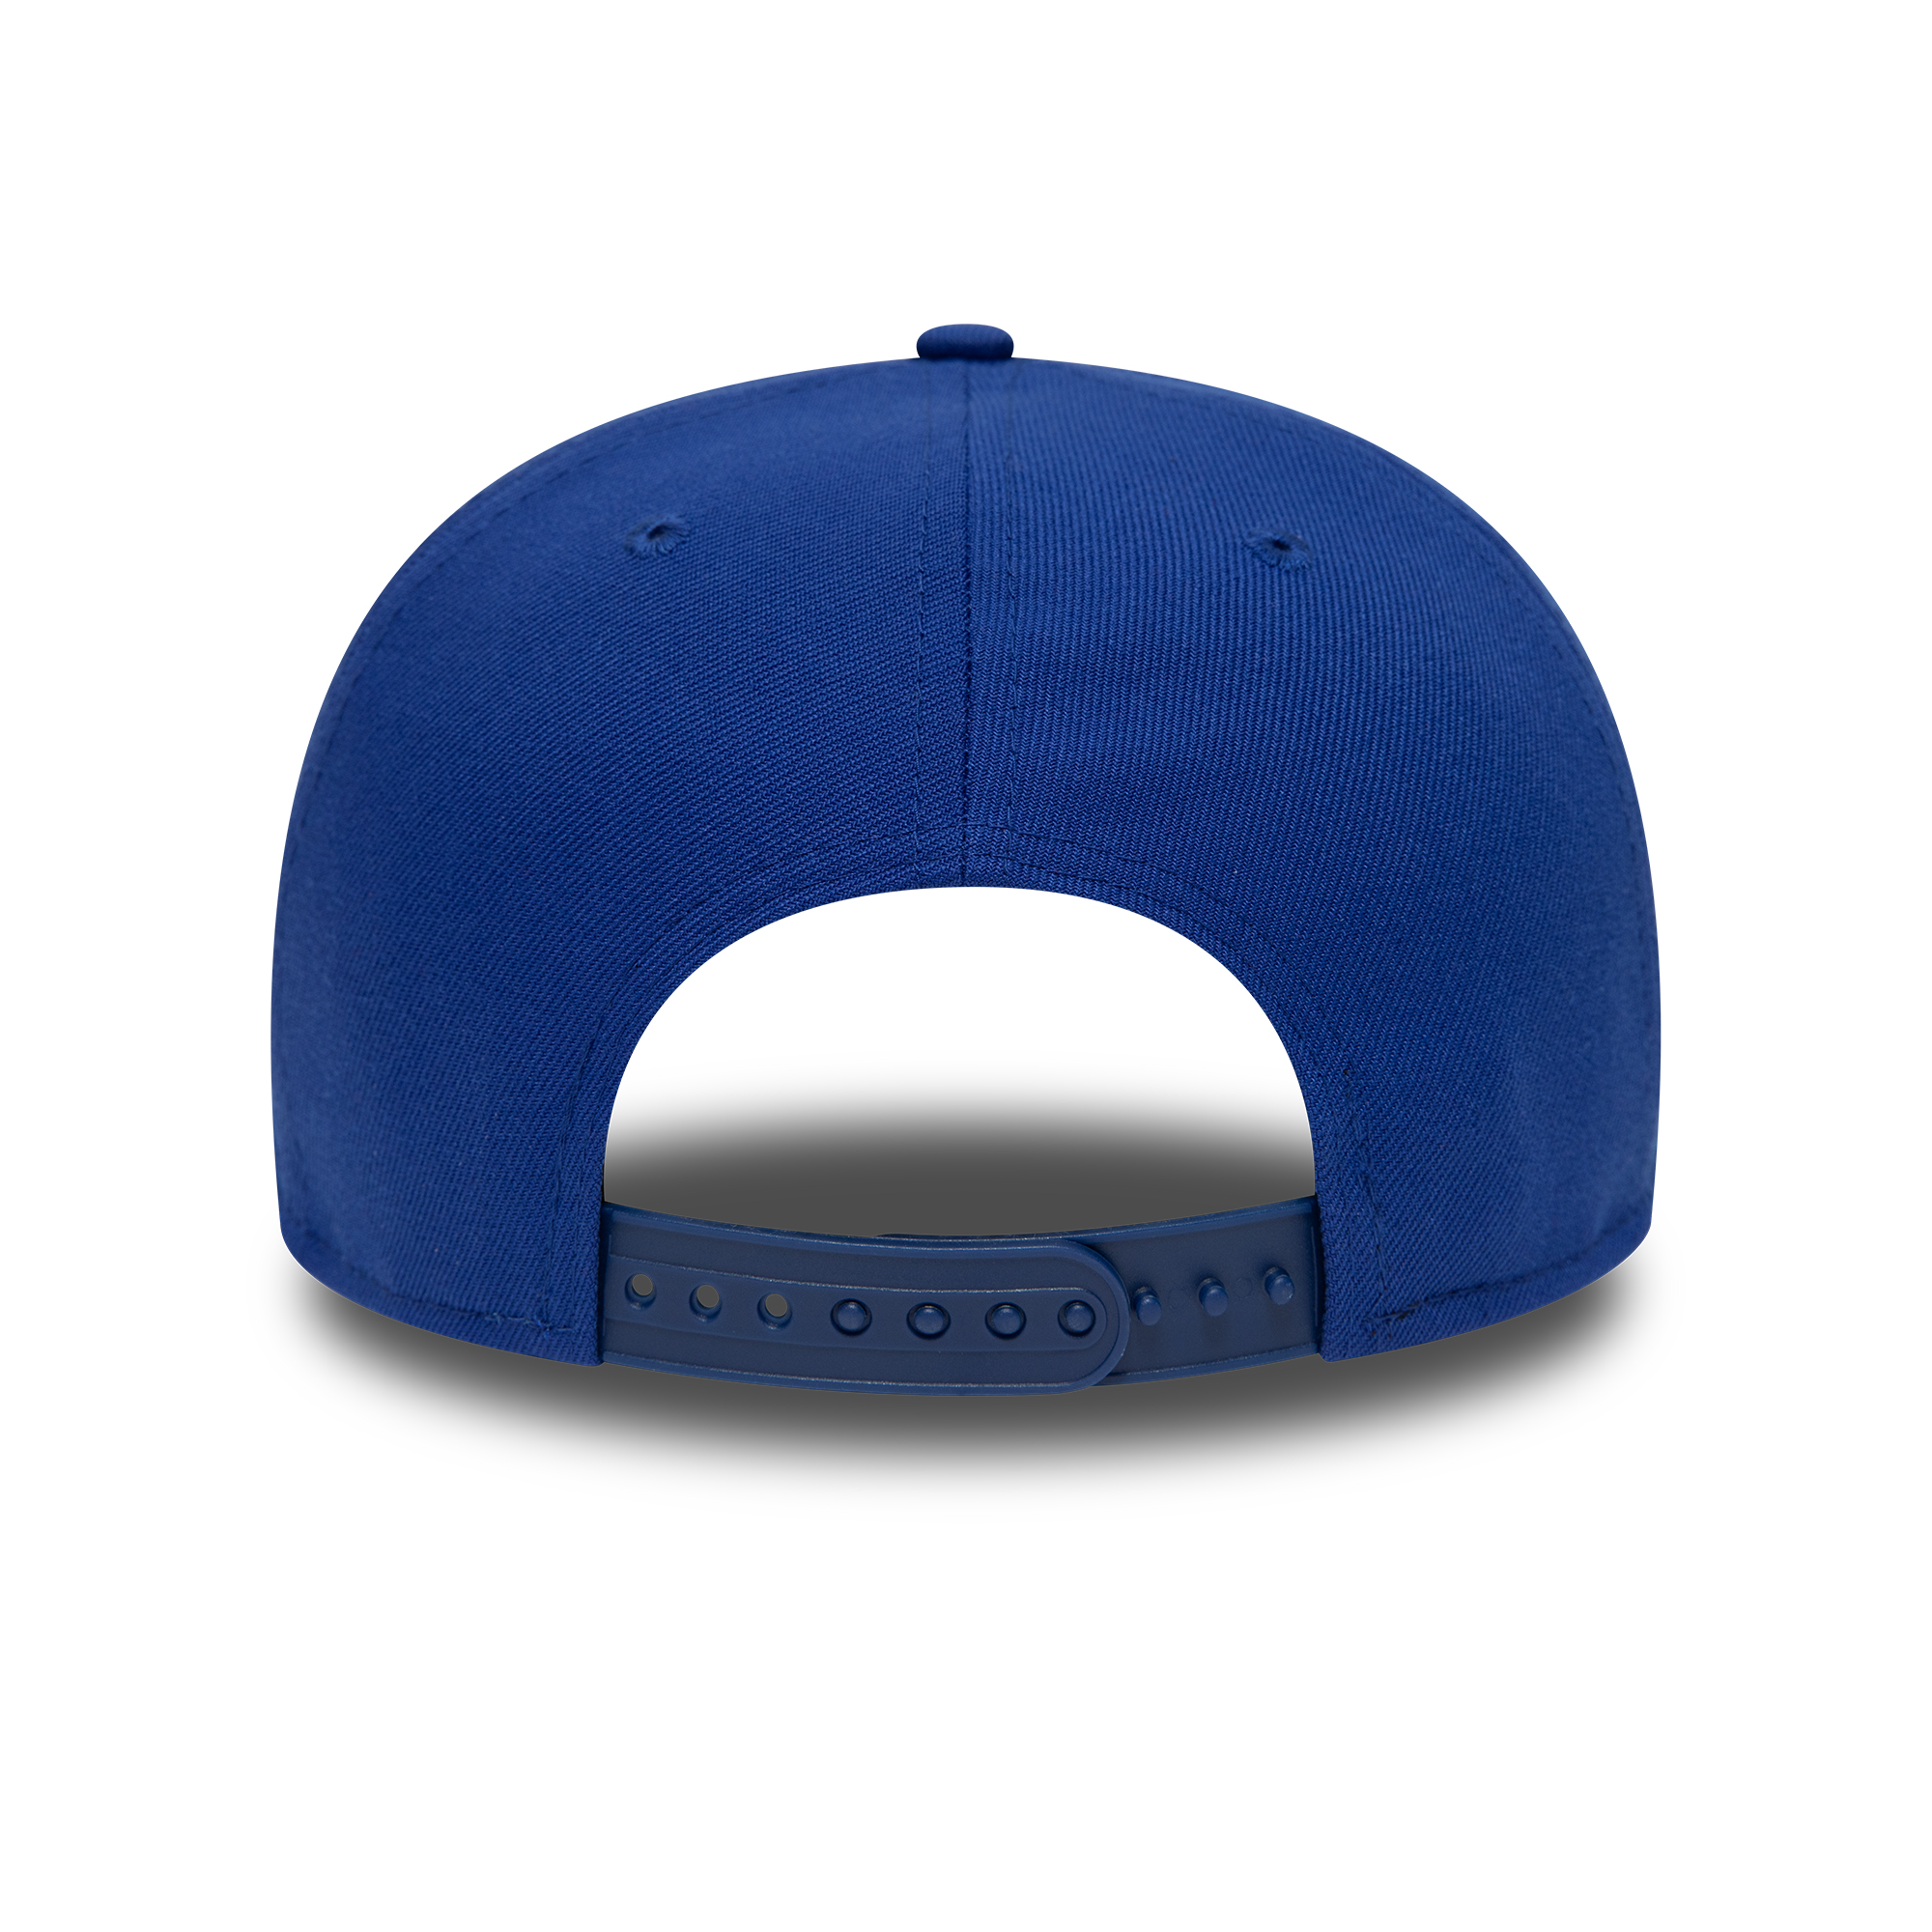 New Era Blue 9FIFTY Snapback Cap